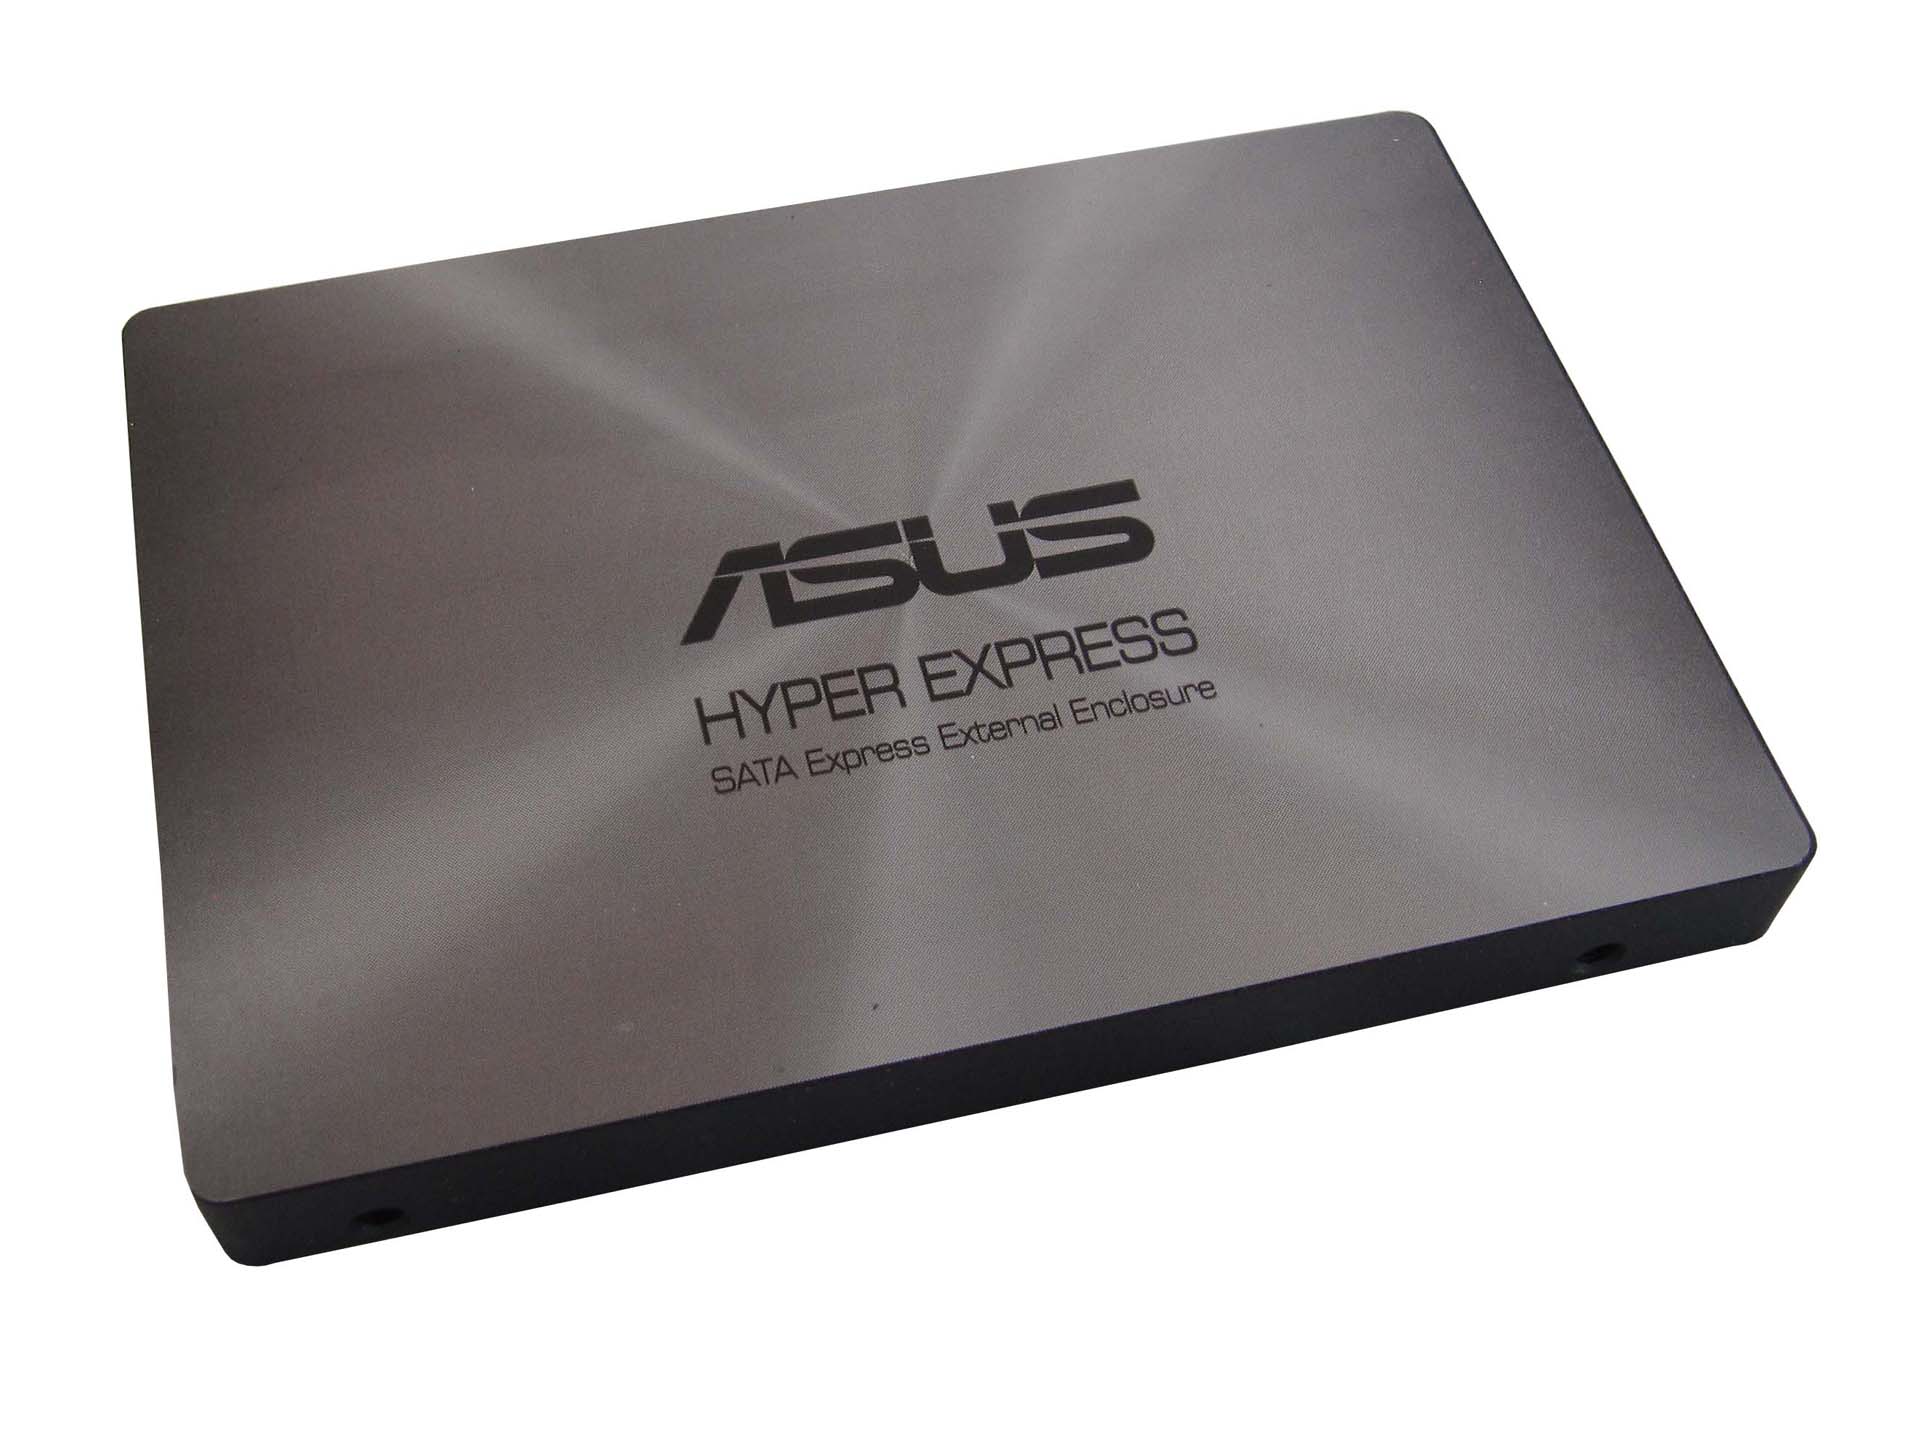 ASUS Hyper Express SSD 256GB test